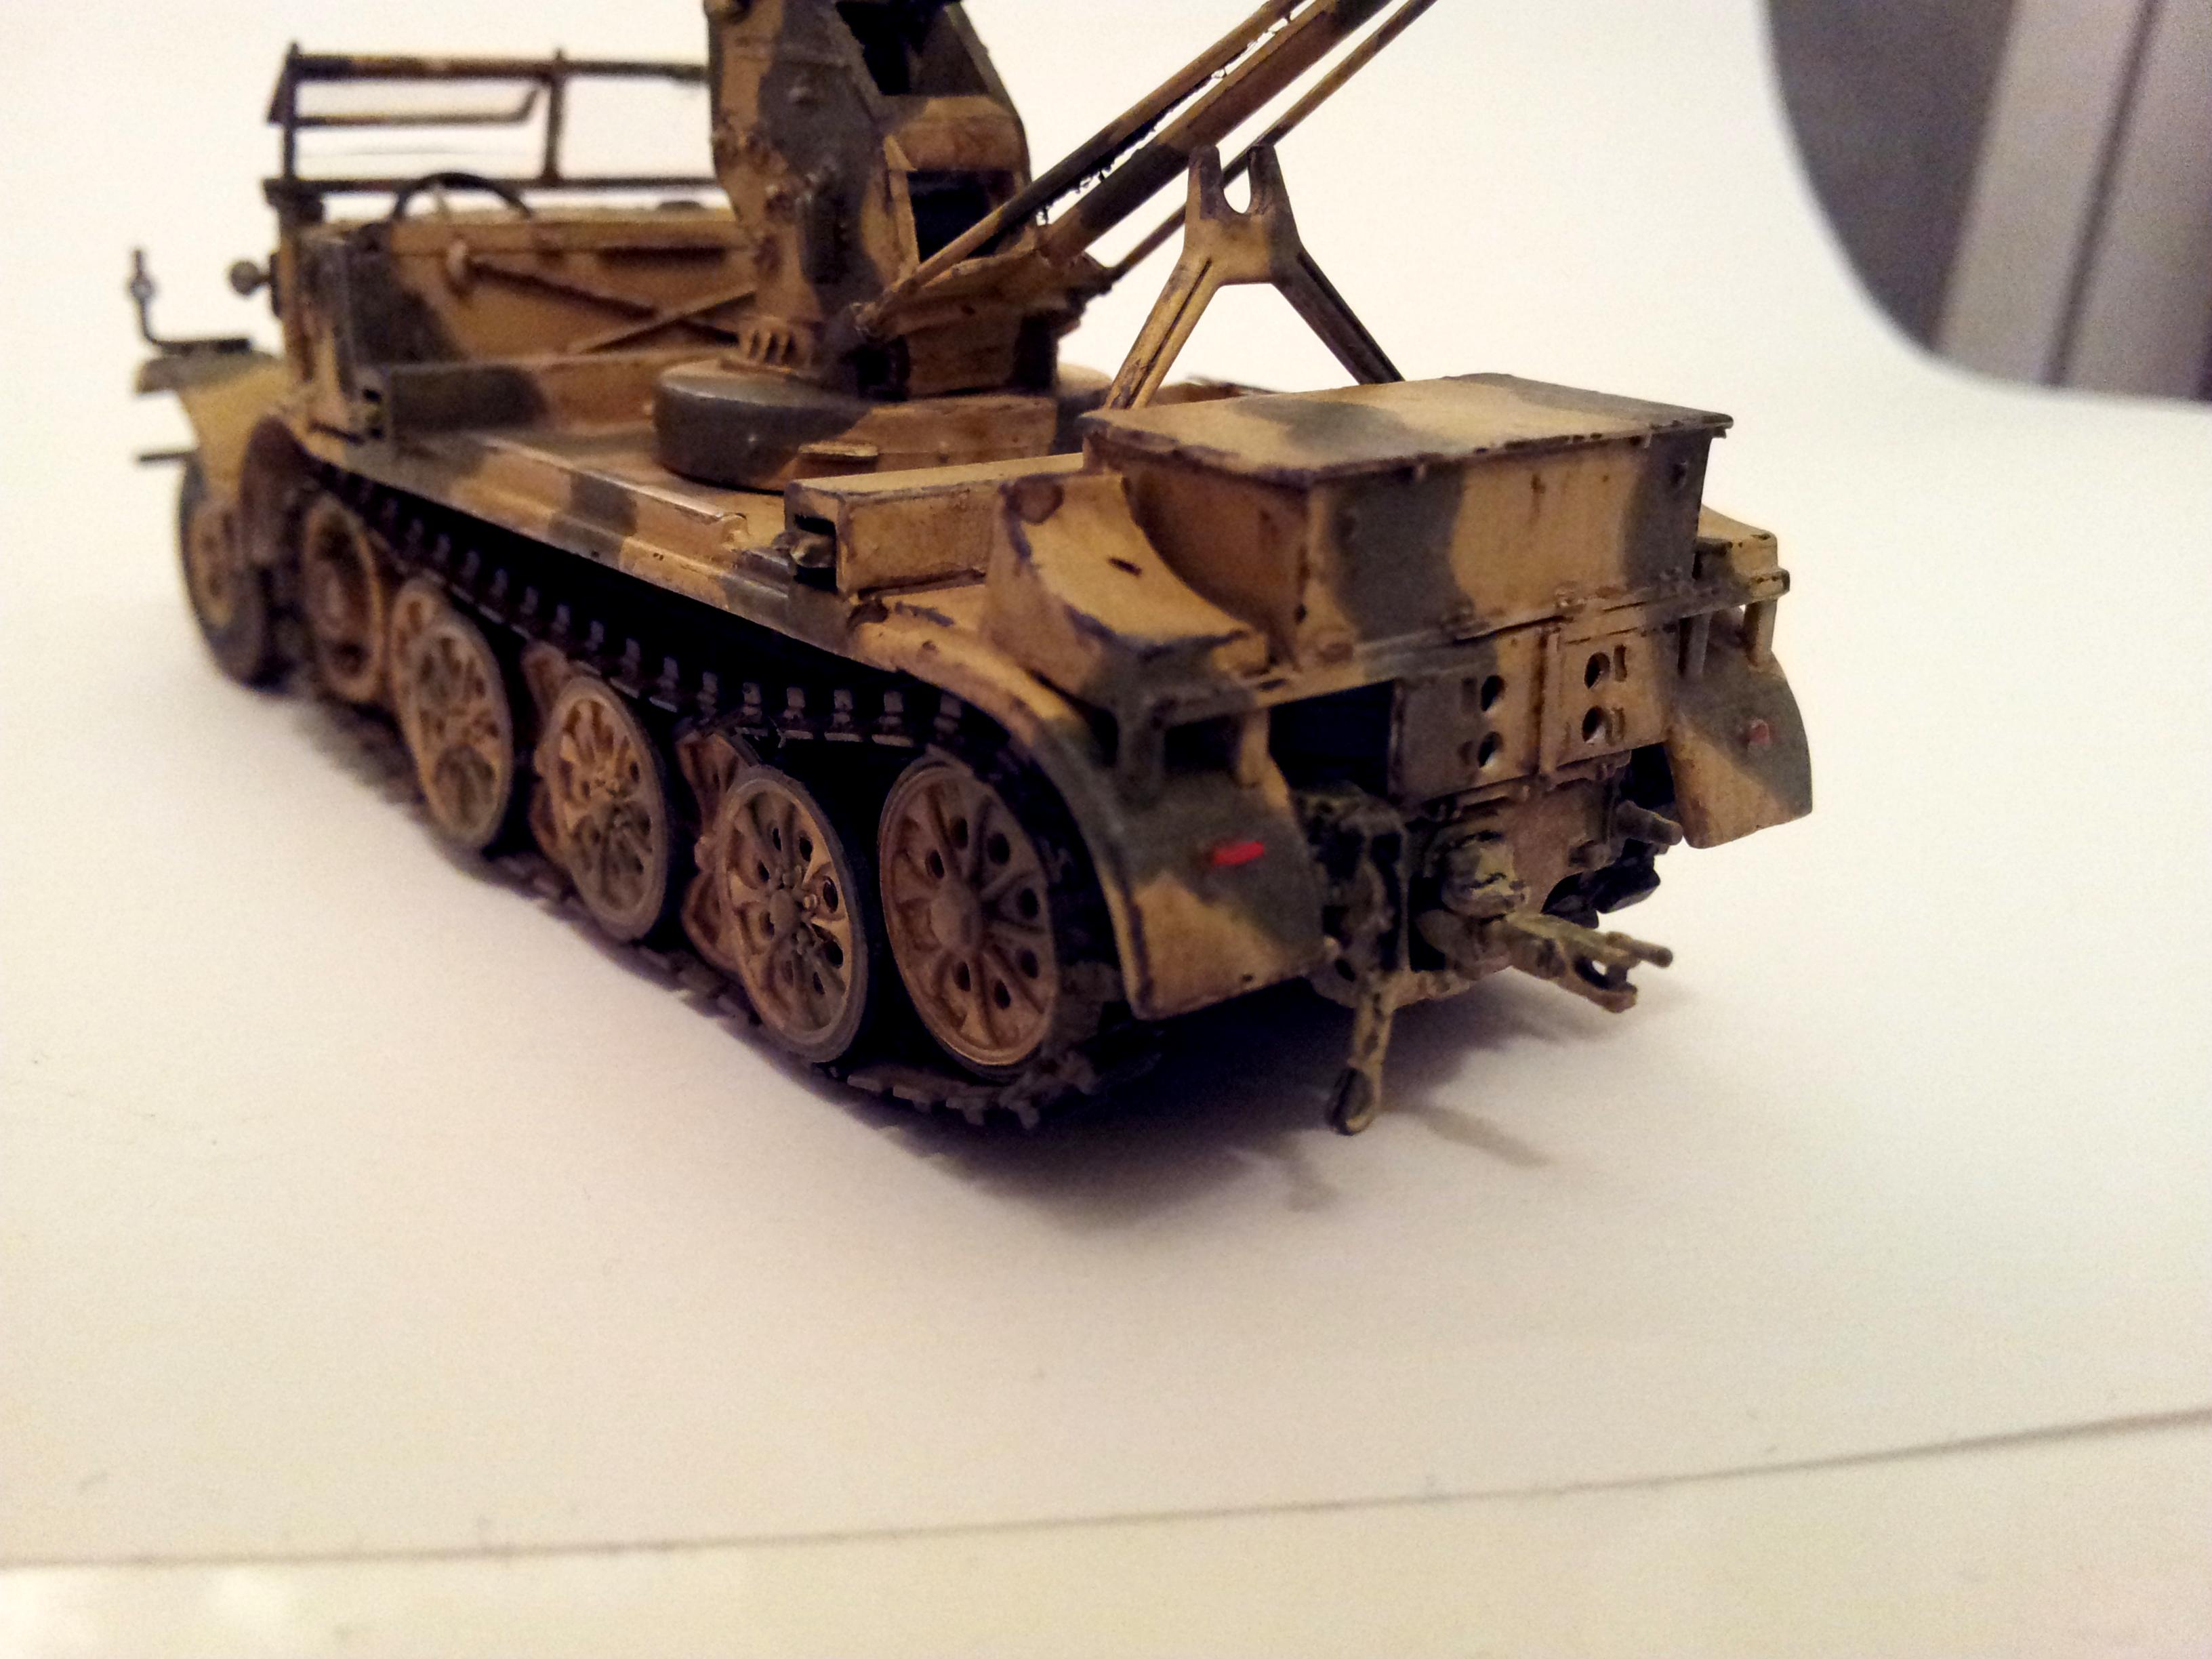 1/72, Famo' Sdkfz 9, Germans, Recovery Vehicle, World War 2